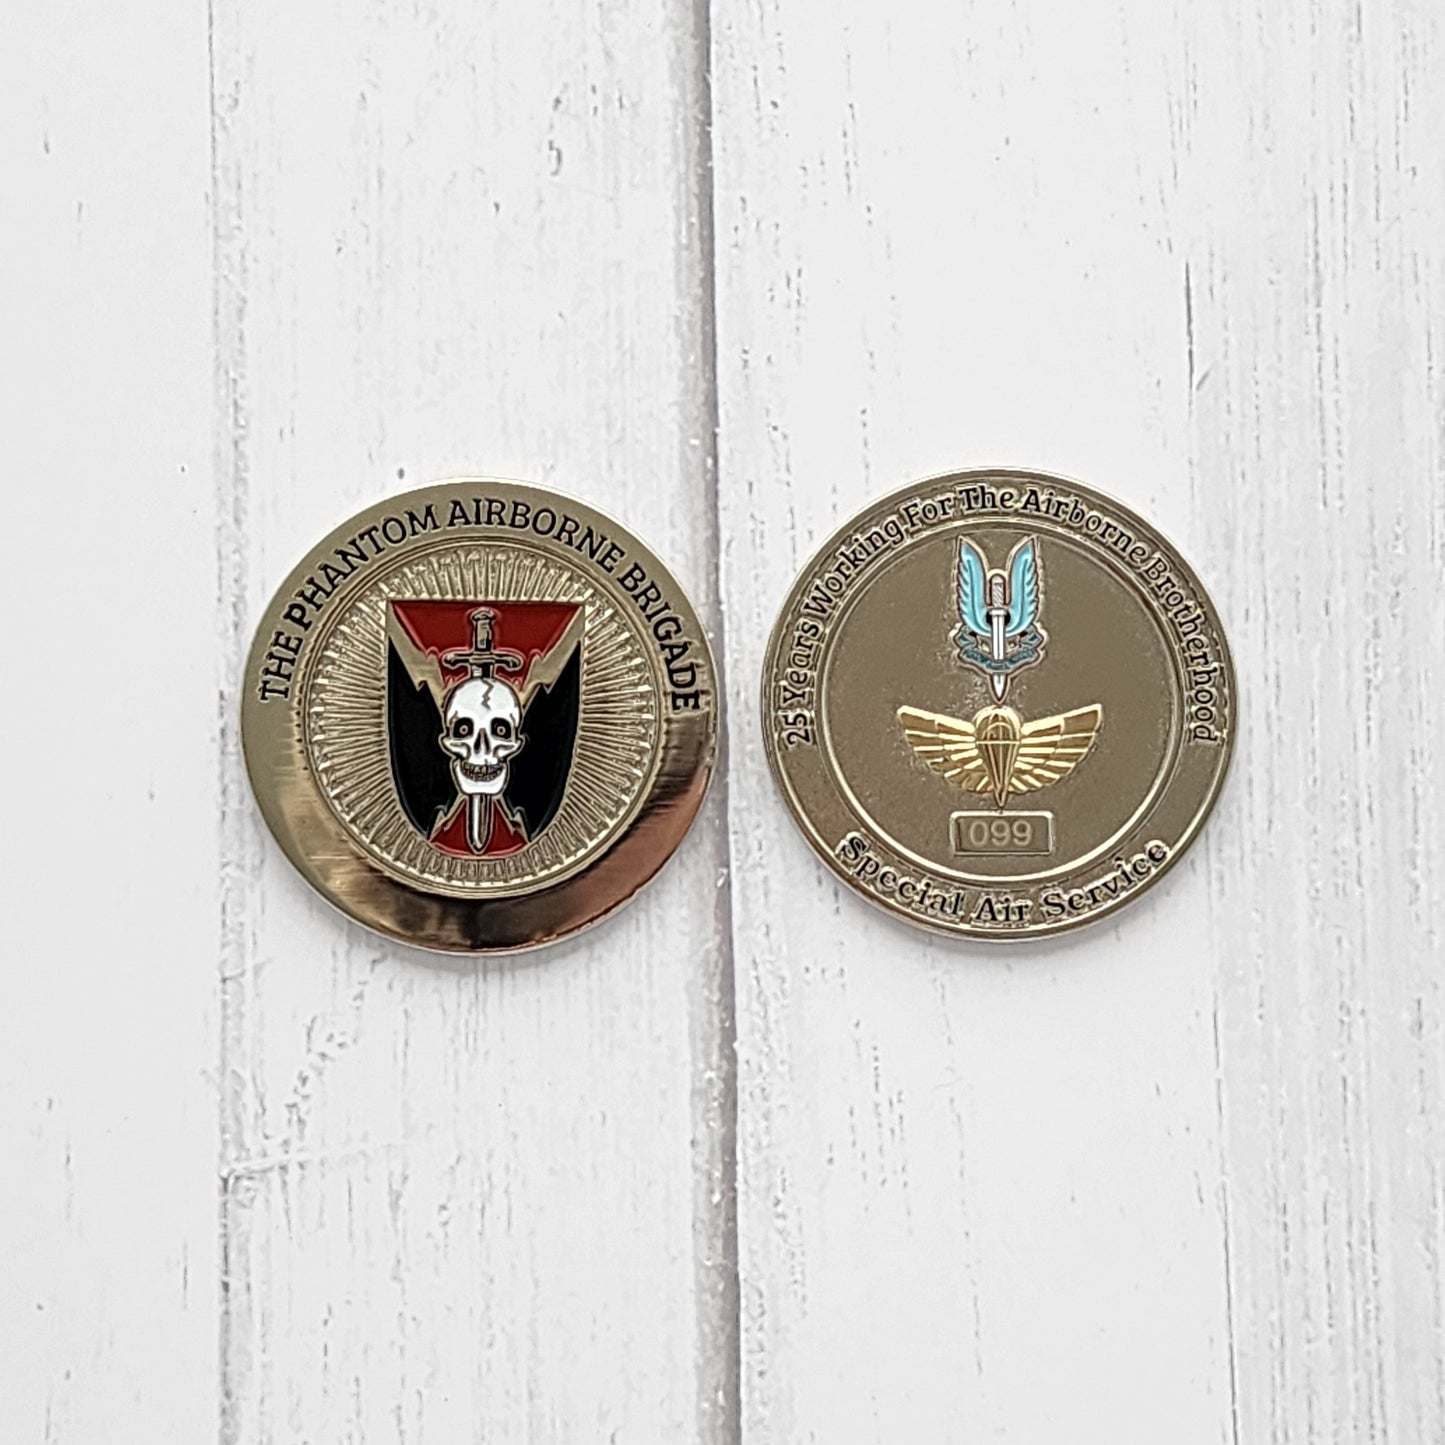 Phantom Airborne Brigade Special Air Service Challange Coin